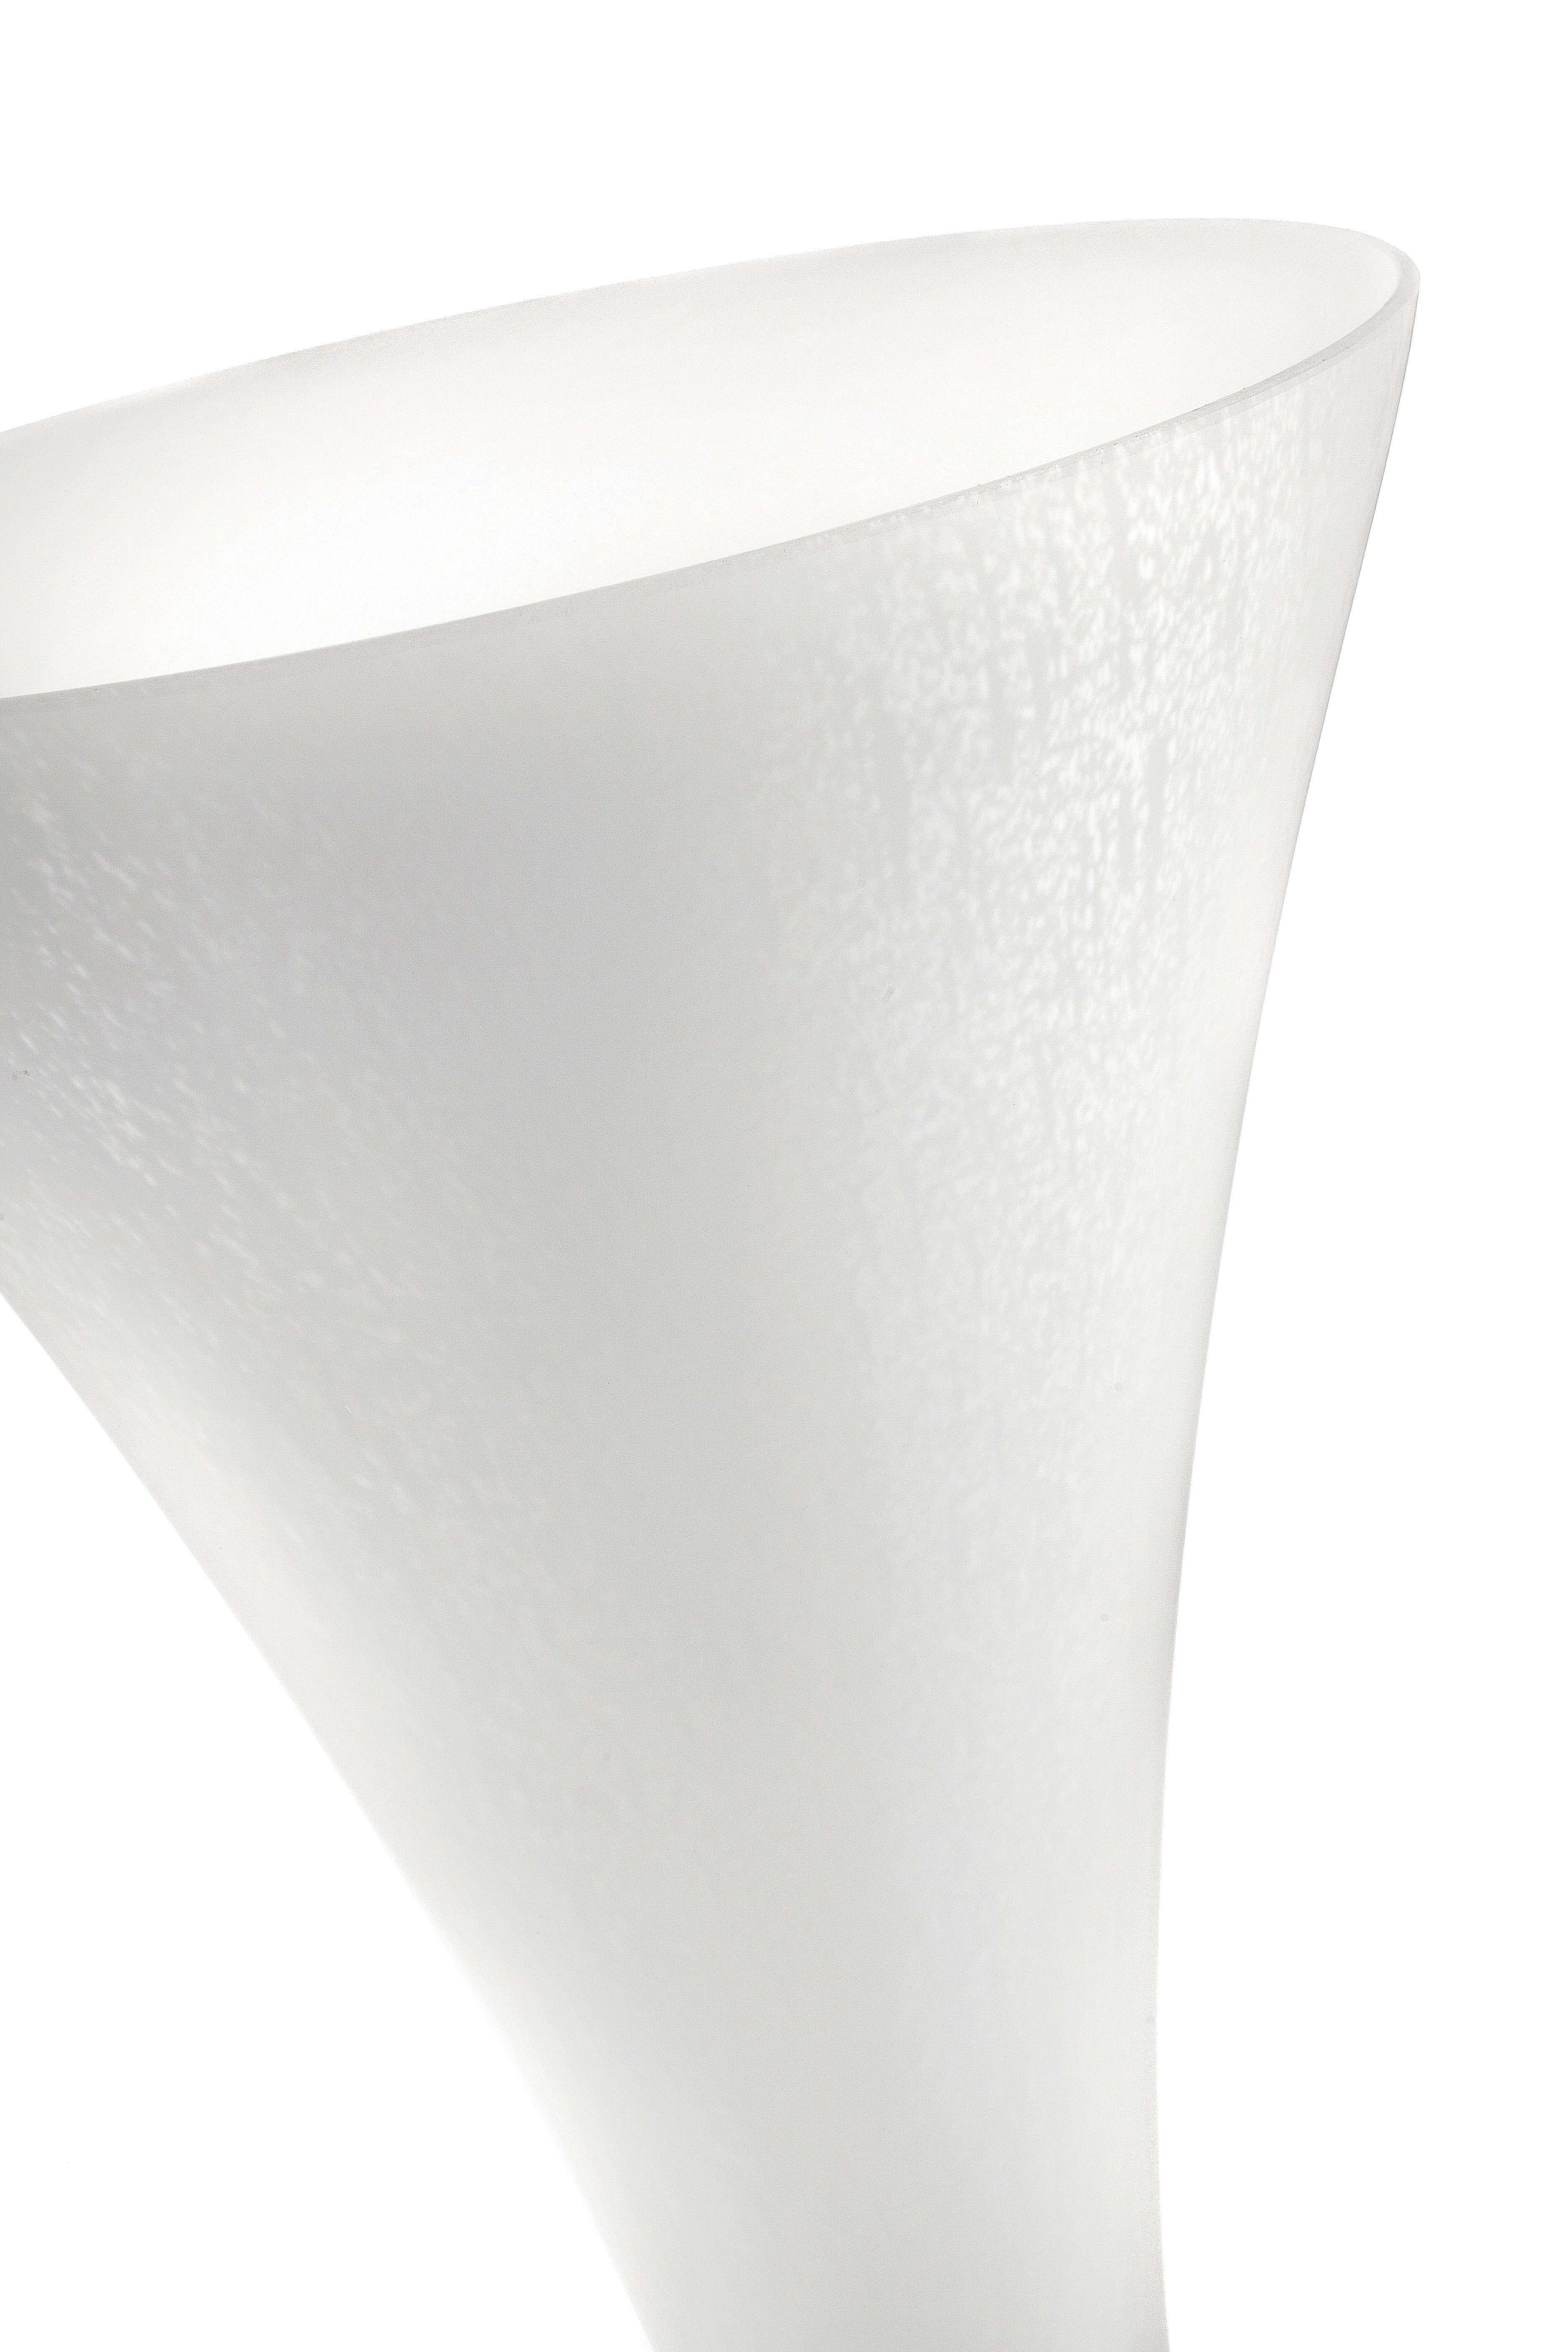 Modern Vistosi Lepanto PT Floor Lamp in White Glass by Luciano Vistosi For Sale